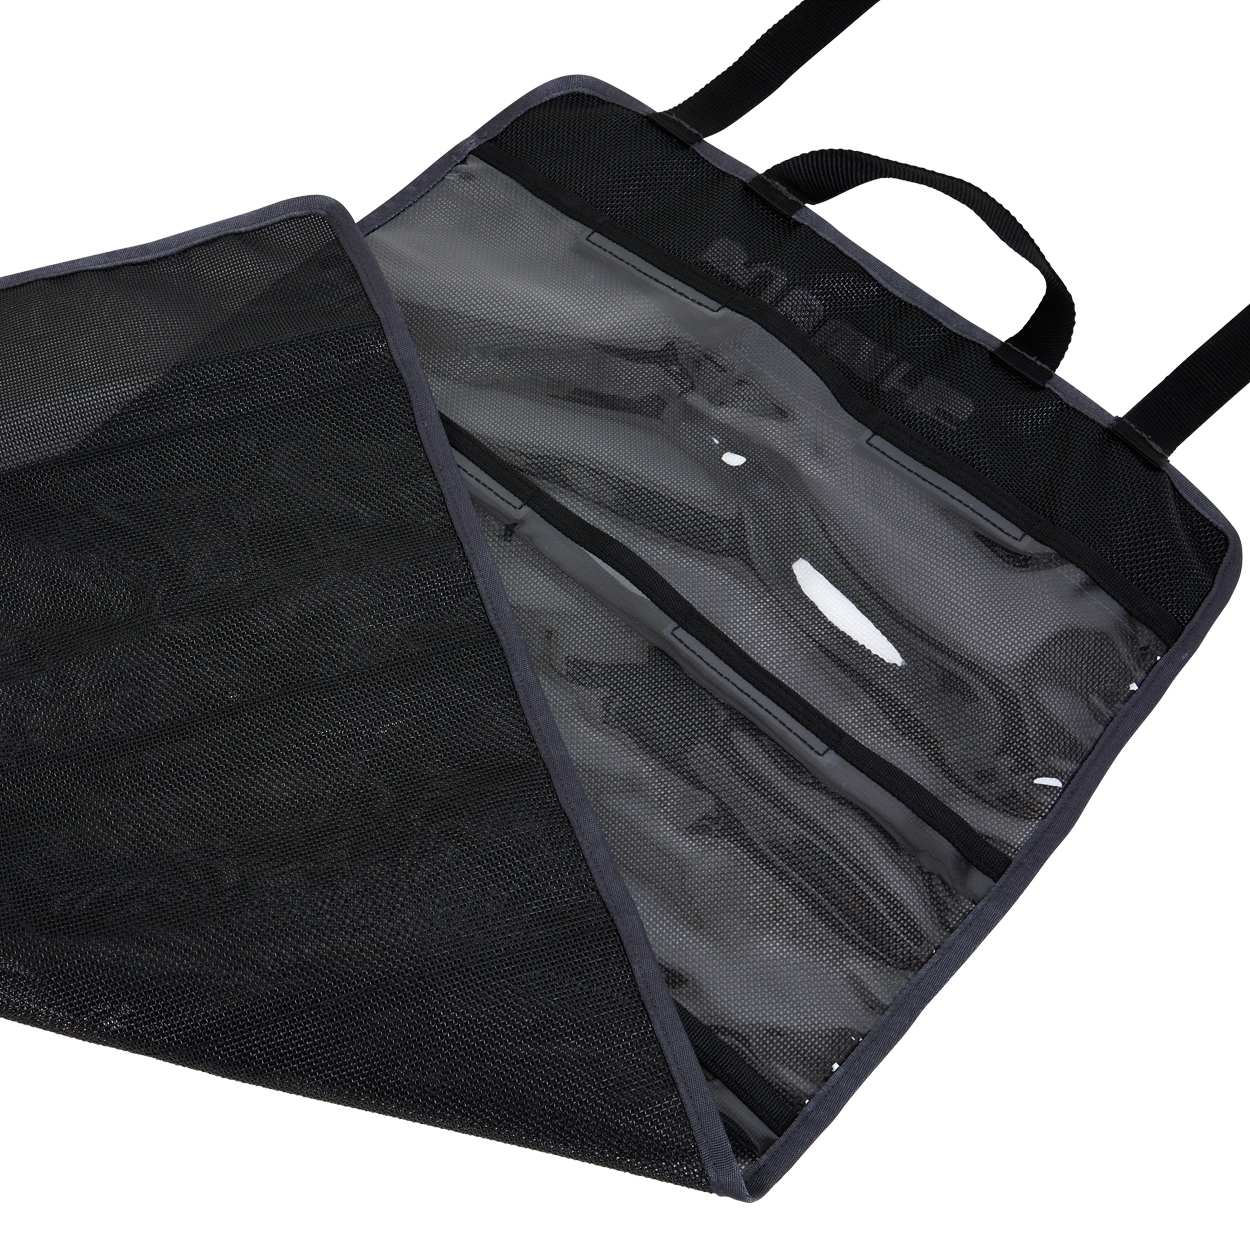 Shimano 2020 Game & Hard Lure Wrap Fishing Bag Luggage #LUGB-04